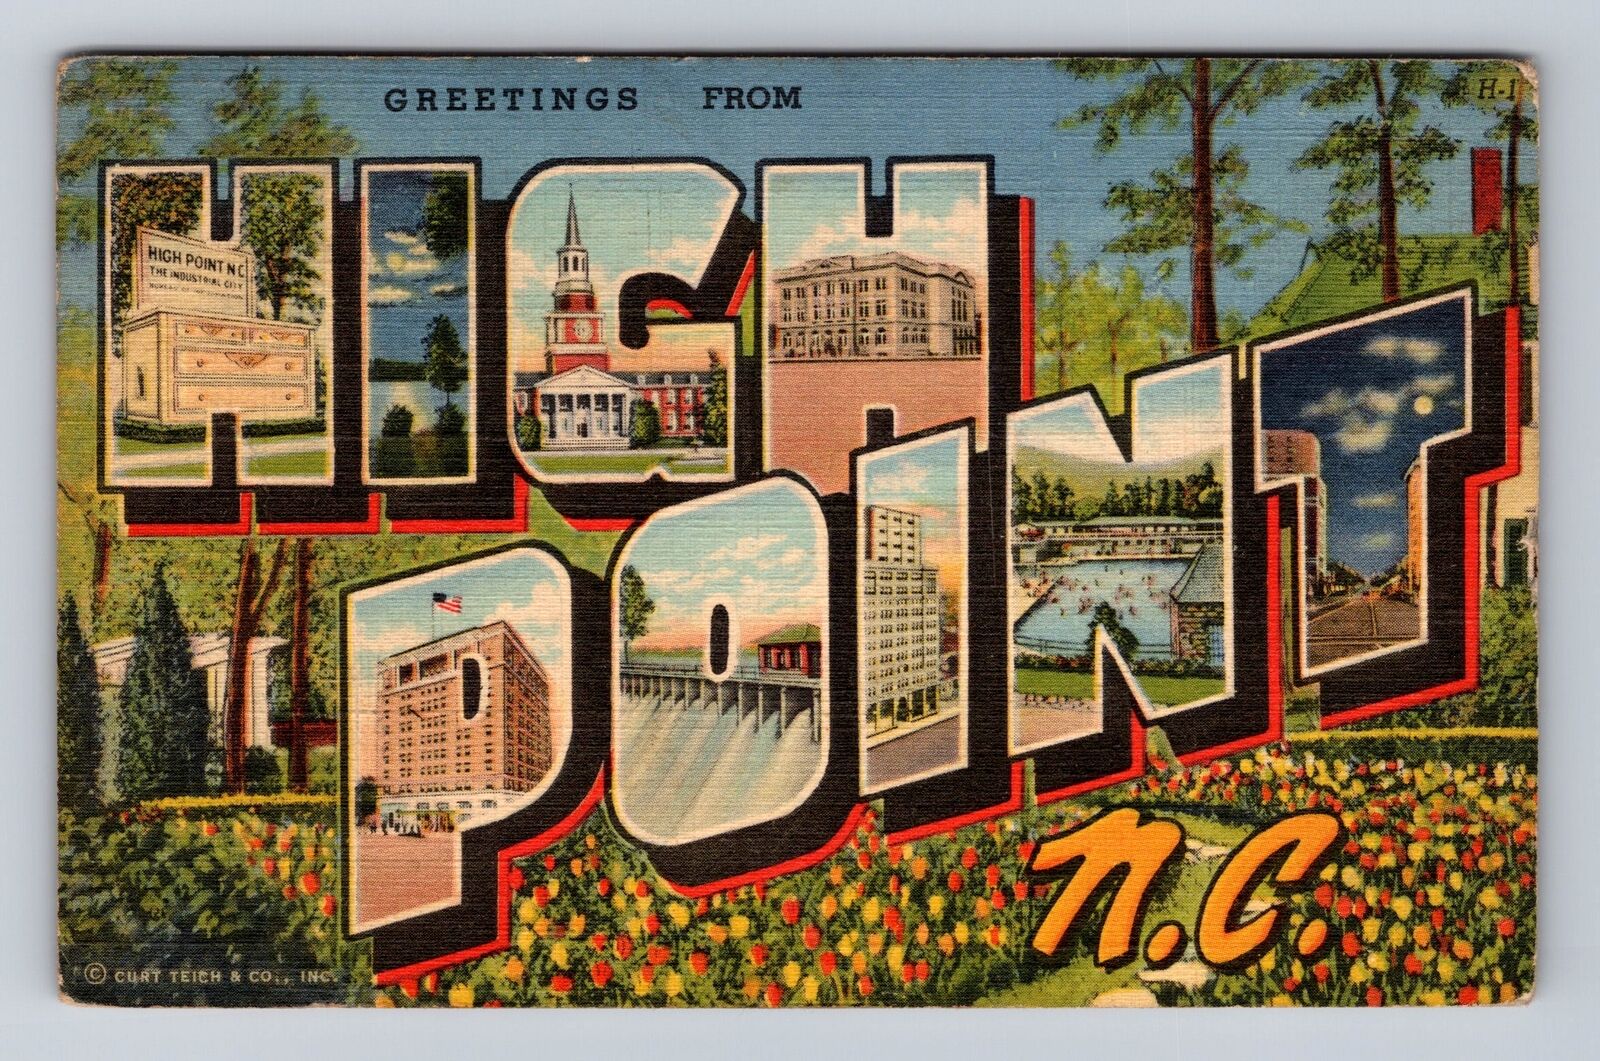 High Point NC- North Carolina, LARGE LETTER Greetings, Vintage c1944 Postcard